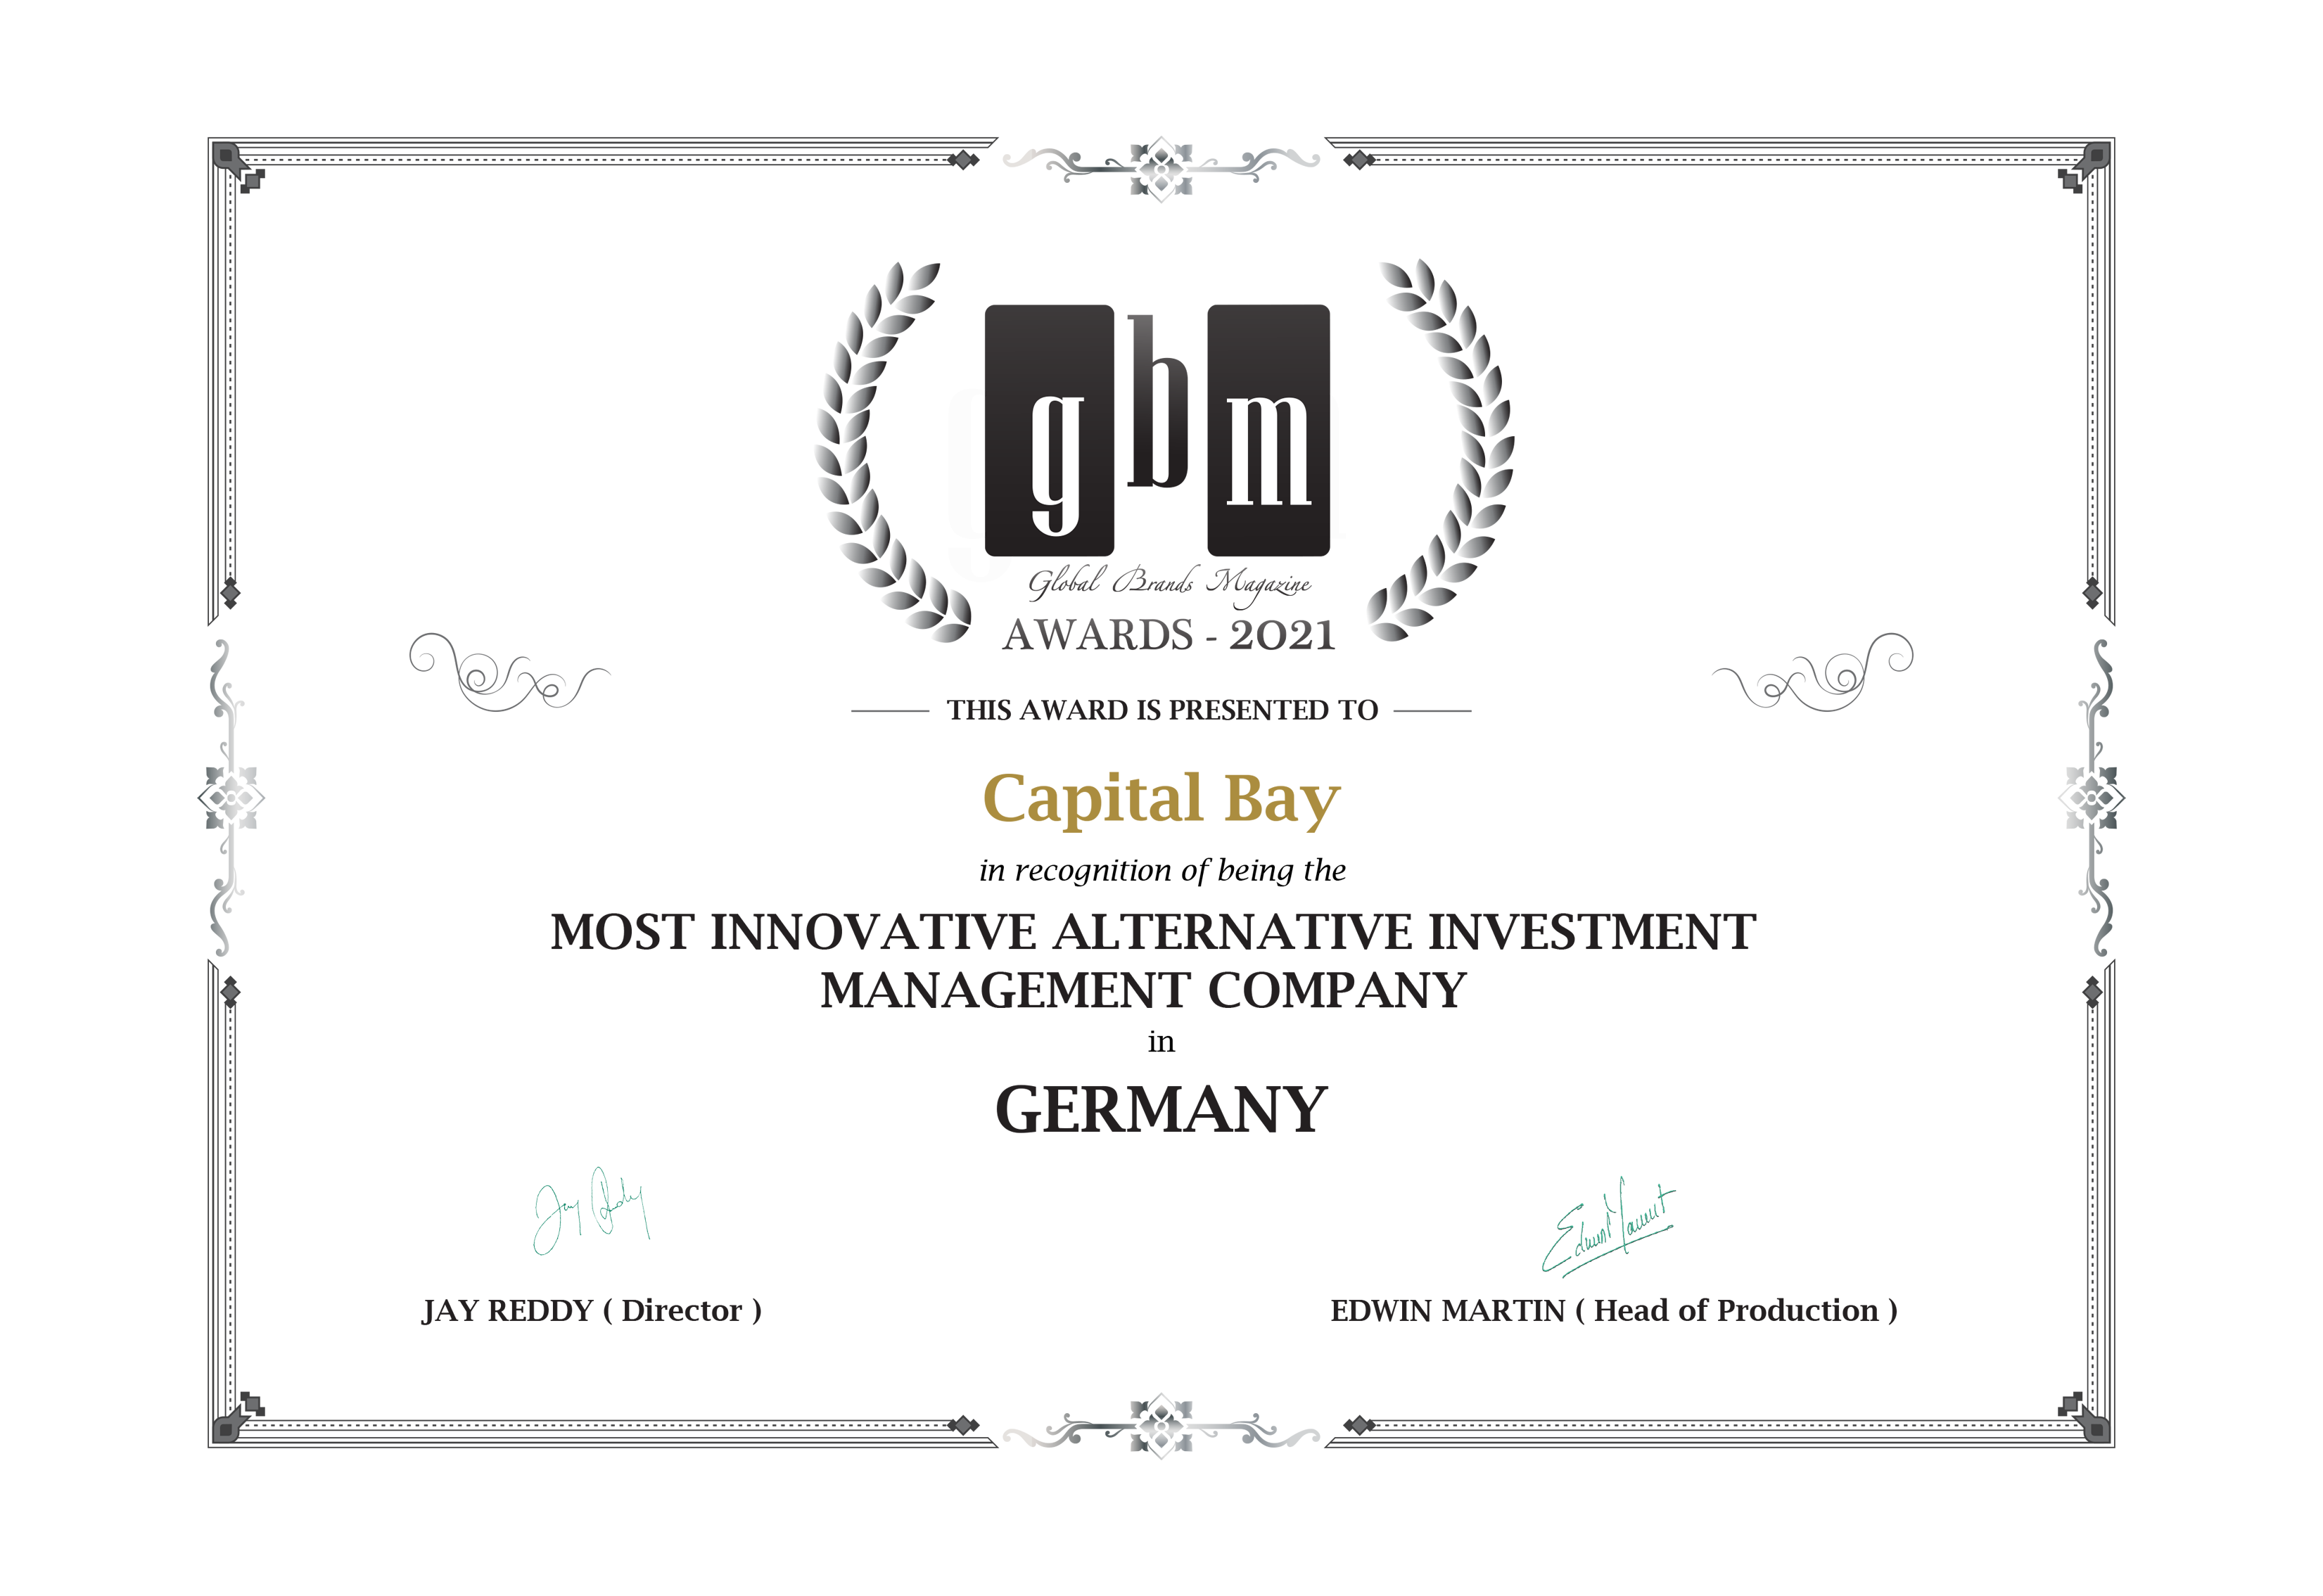 Capital Bay gewinnt Award als Most Innovative Alternative Investment Management Company 